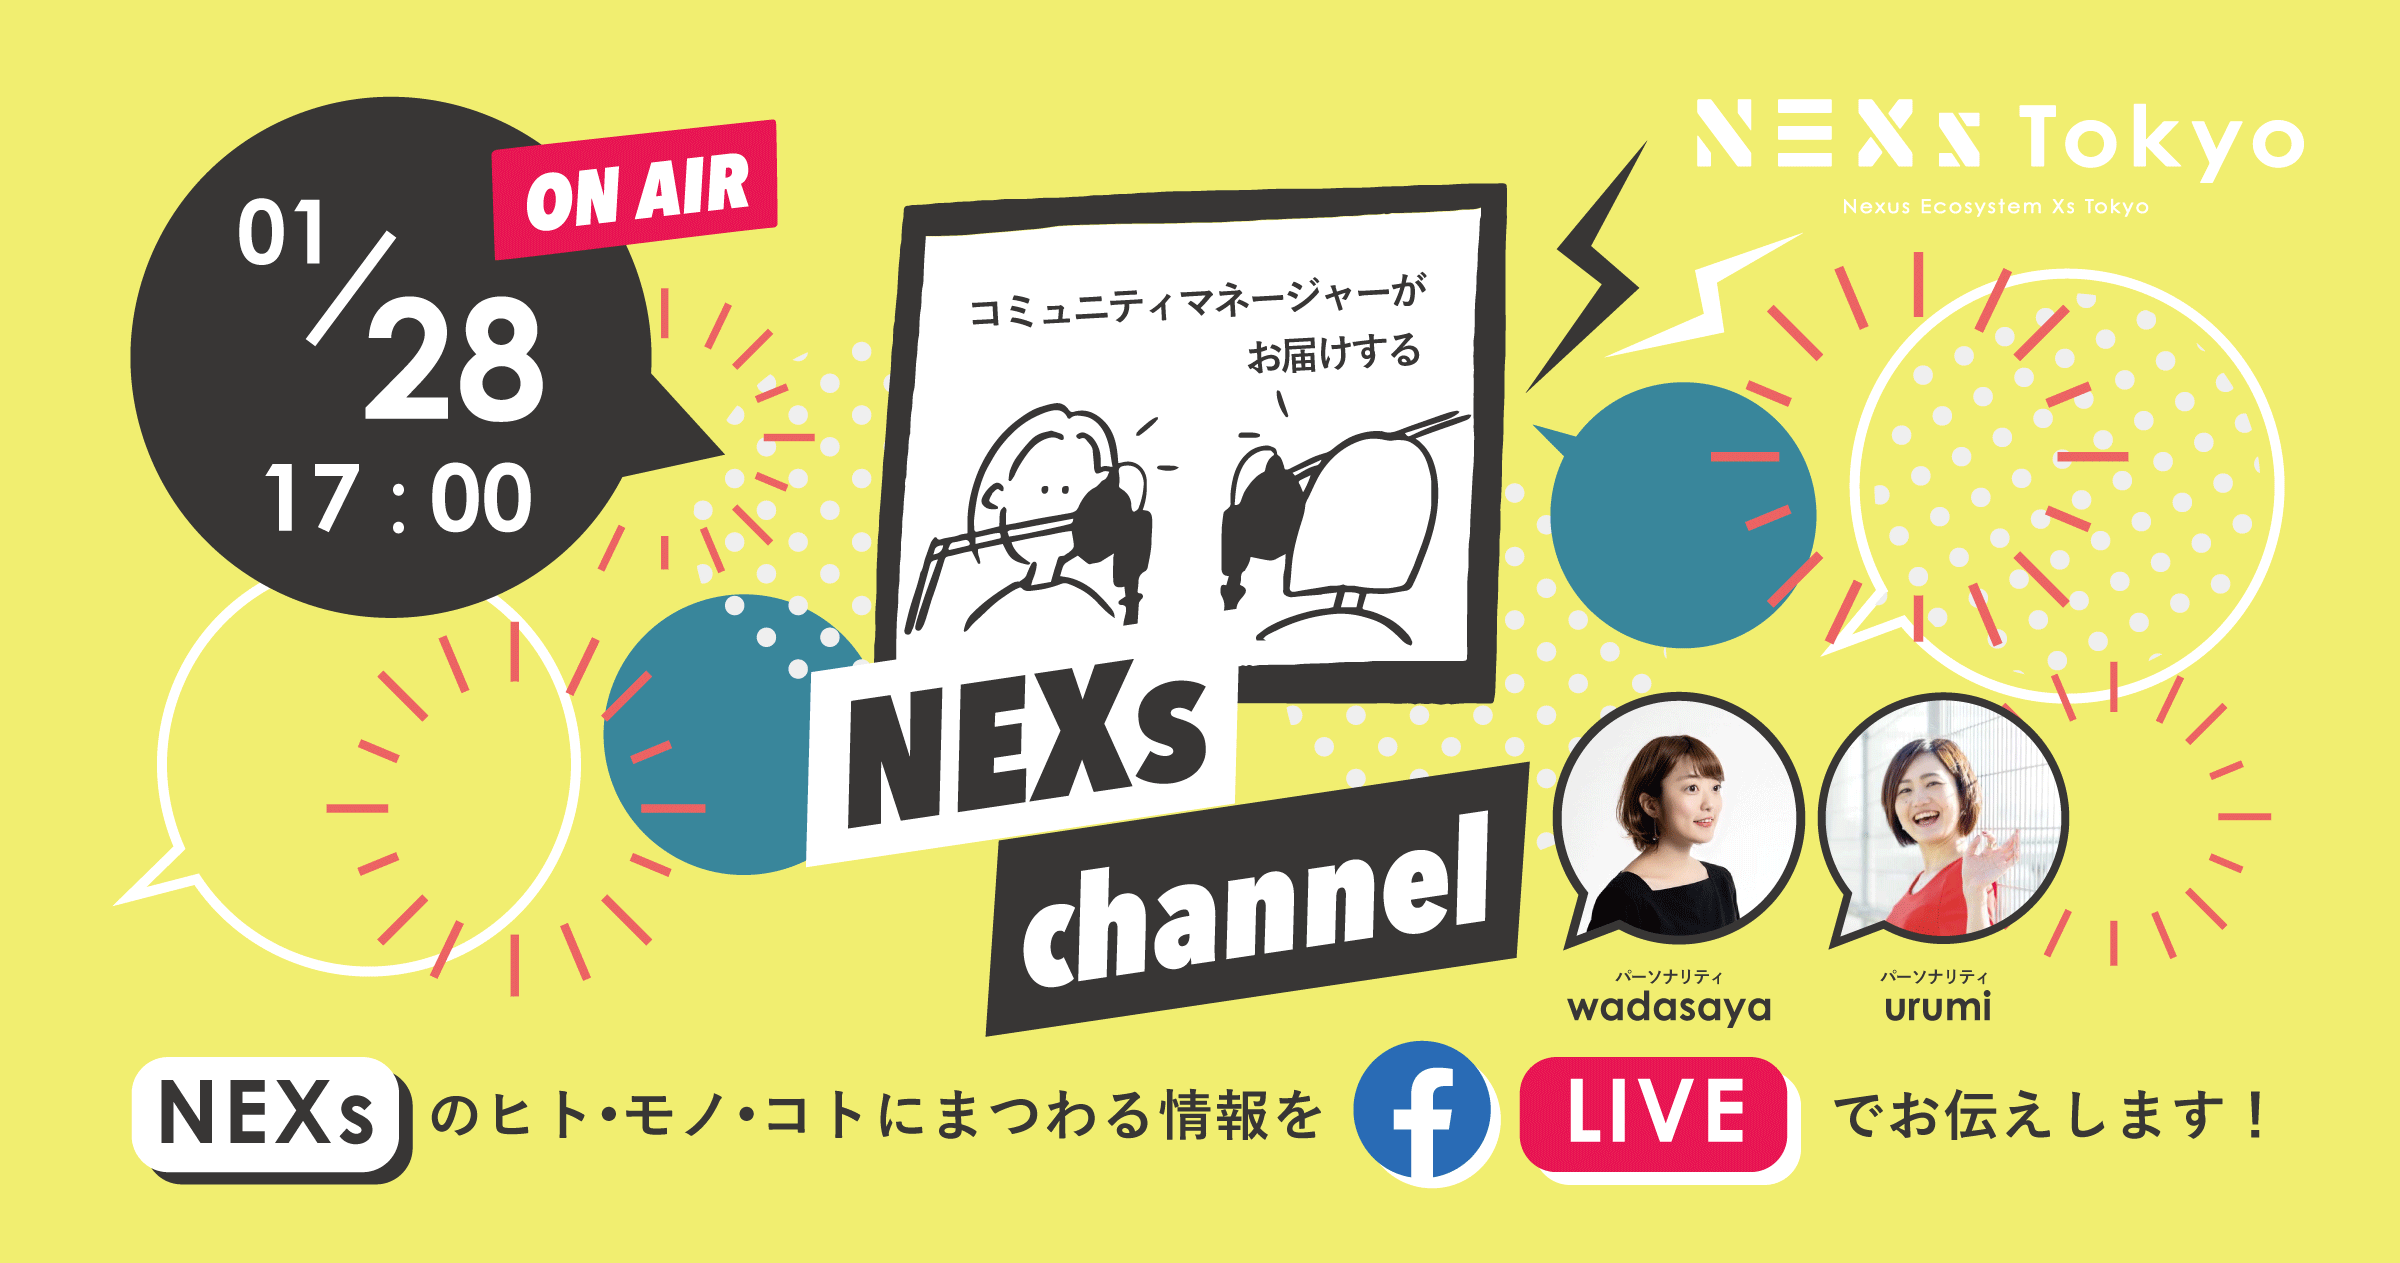 NEXs channel -NEXsTokyoのヒト・モノ・コトを特設ラジオブースから生放送でお届け！-